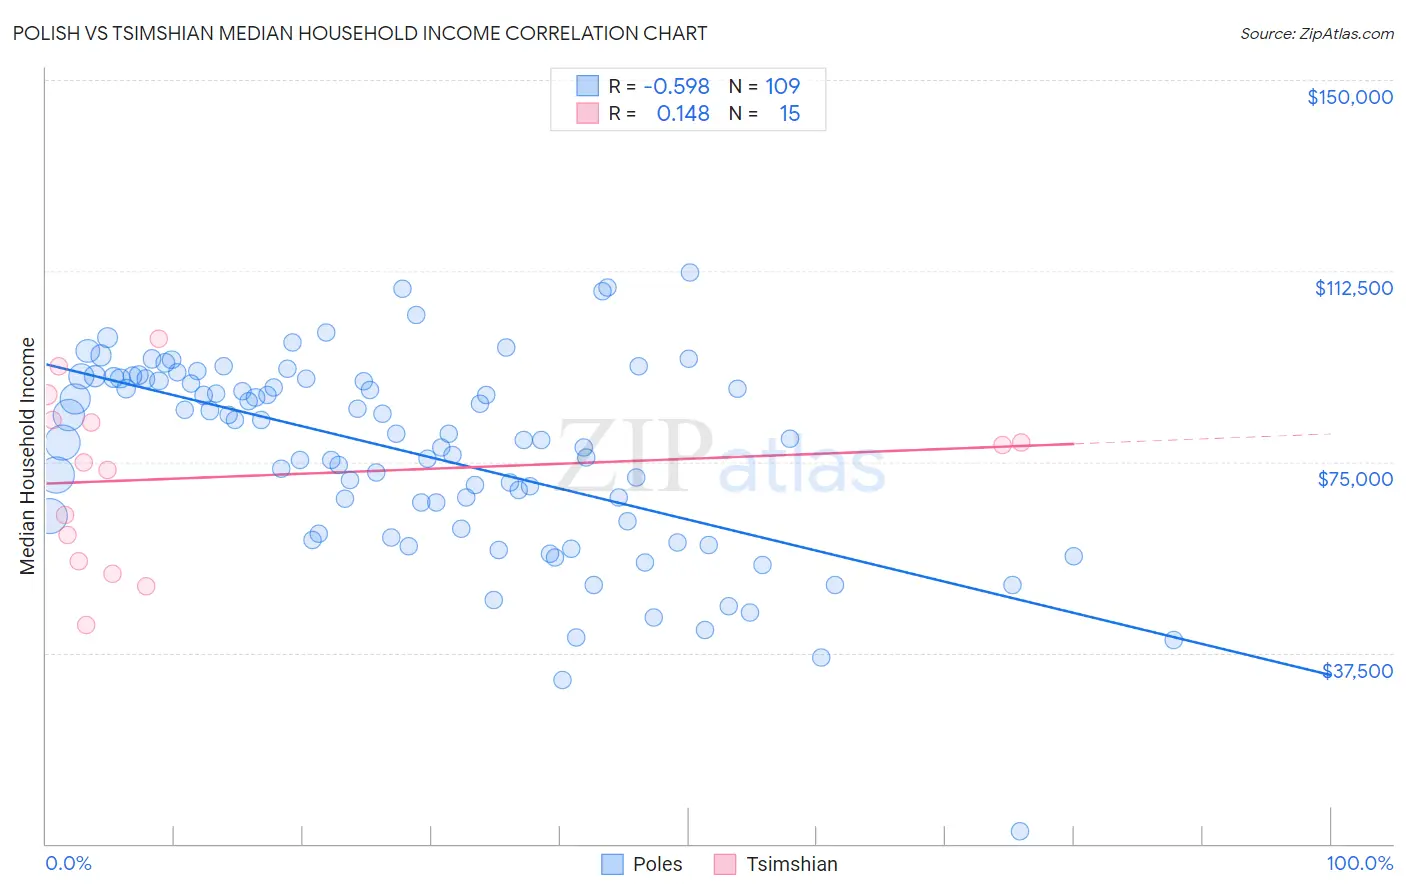 Polish vs Tsimshian Median Household Income